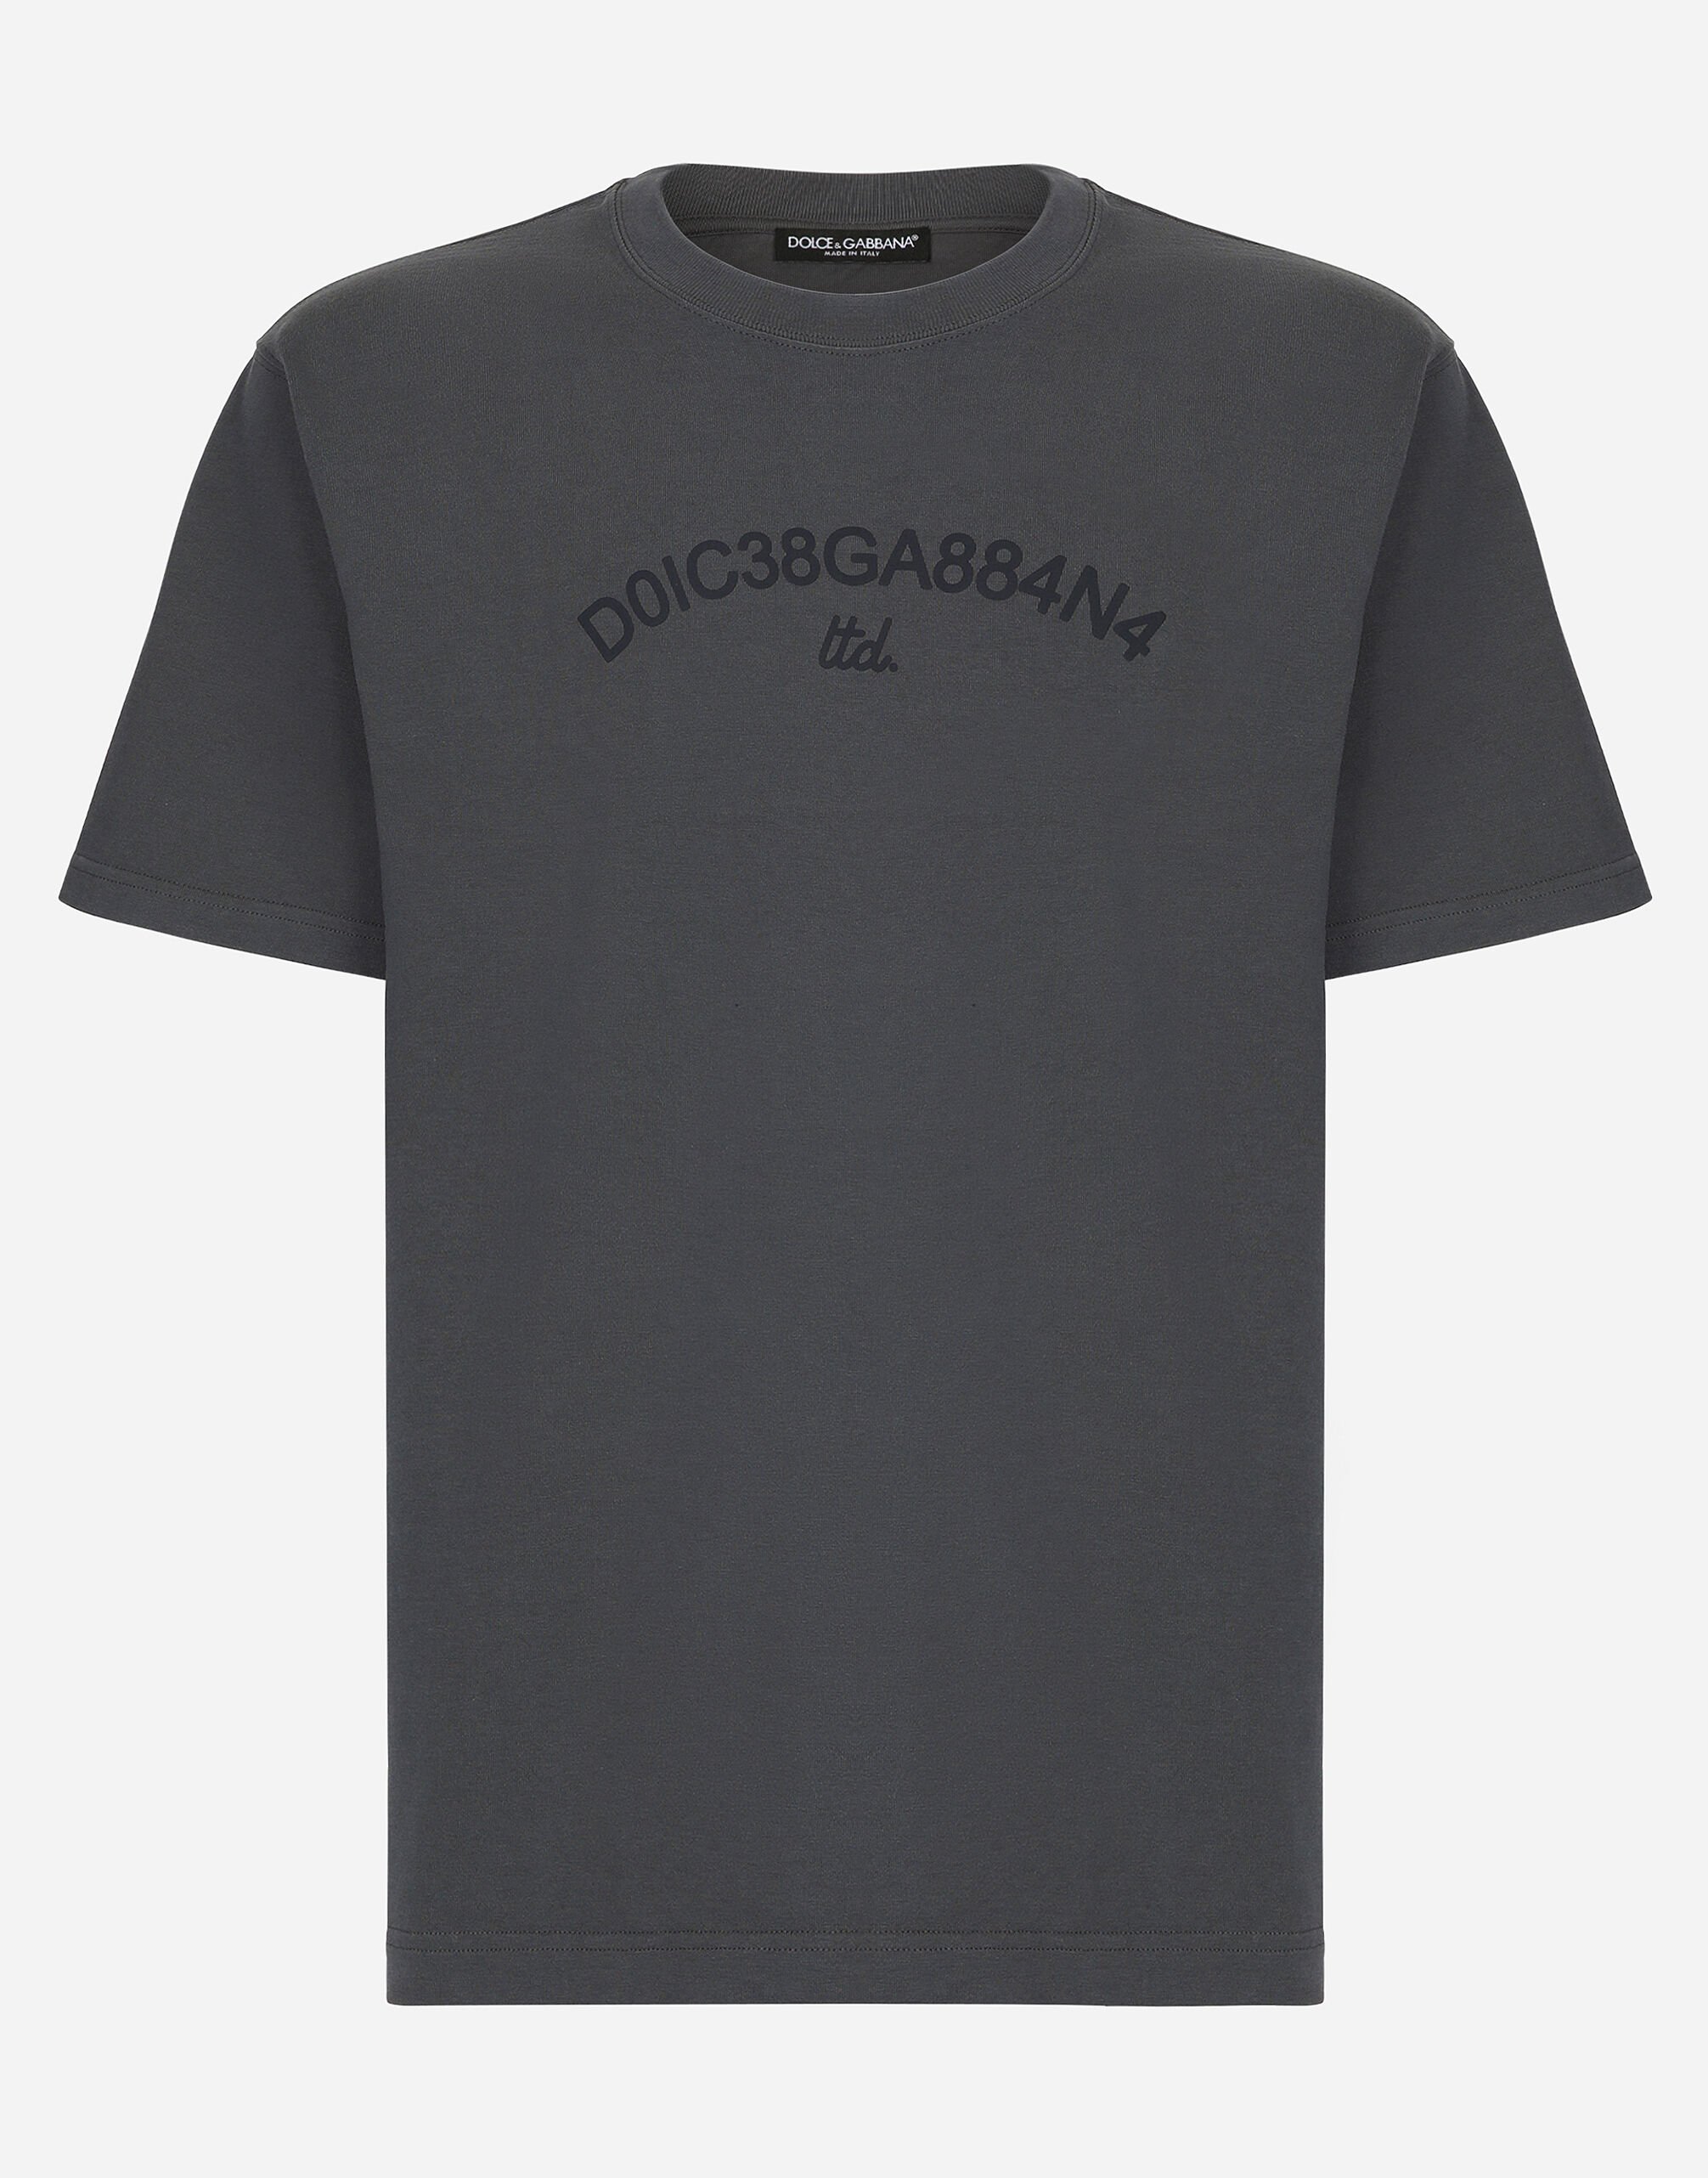 ${brand} Cotton T-shirt with Dolce&Gabbana logo ${colorDescription} ${masterID}